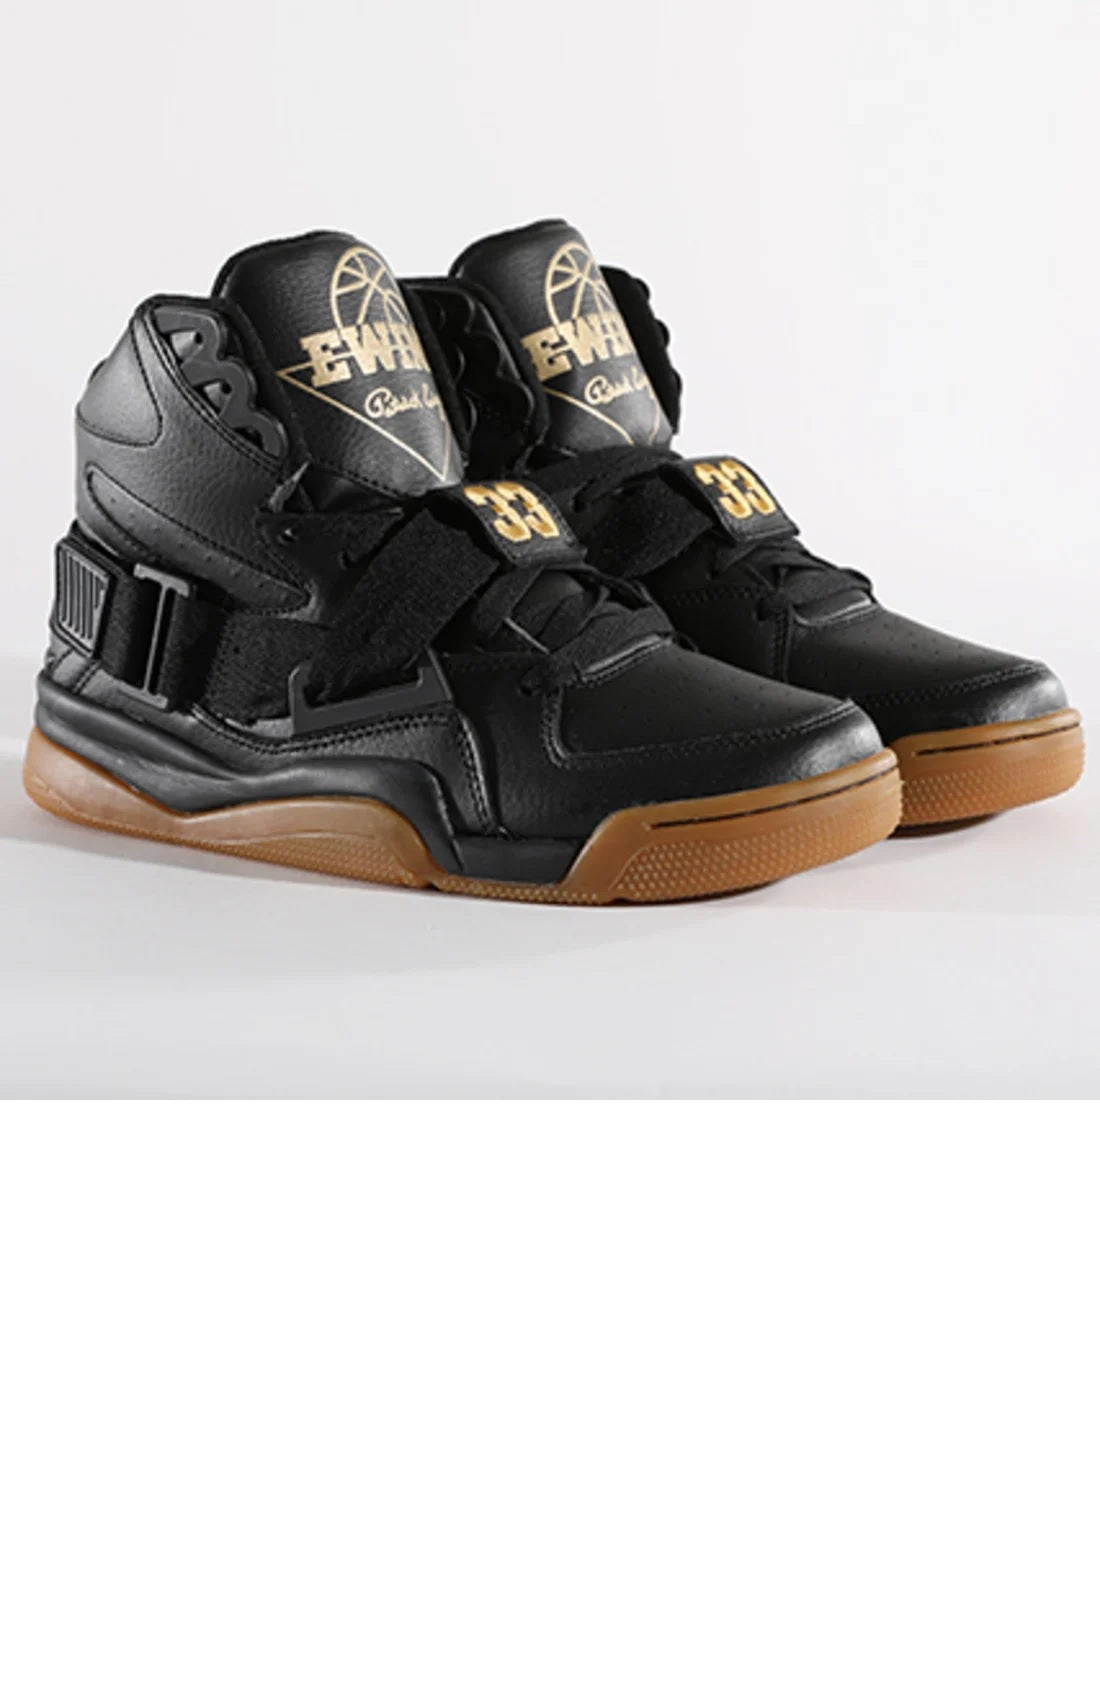 Ewing Athletics Men's High-Top Sneakers Ewing Concept Black/Gold/Gum